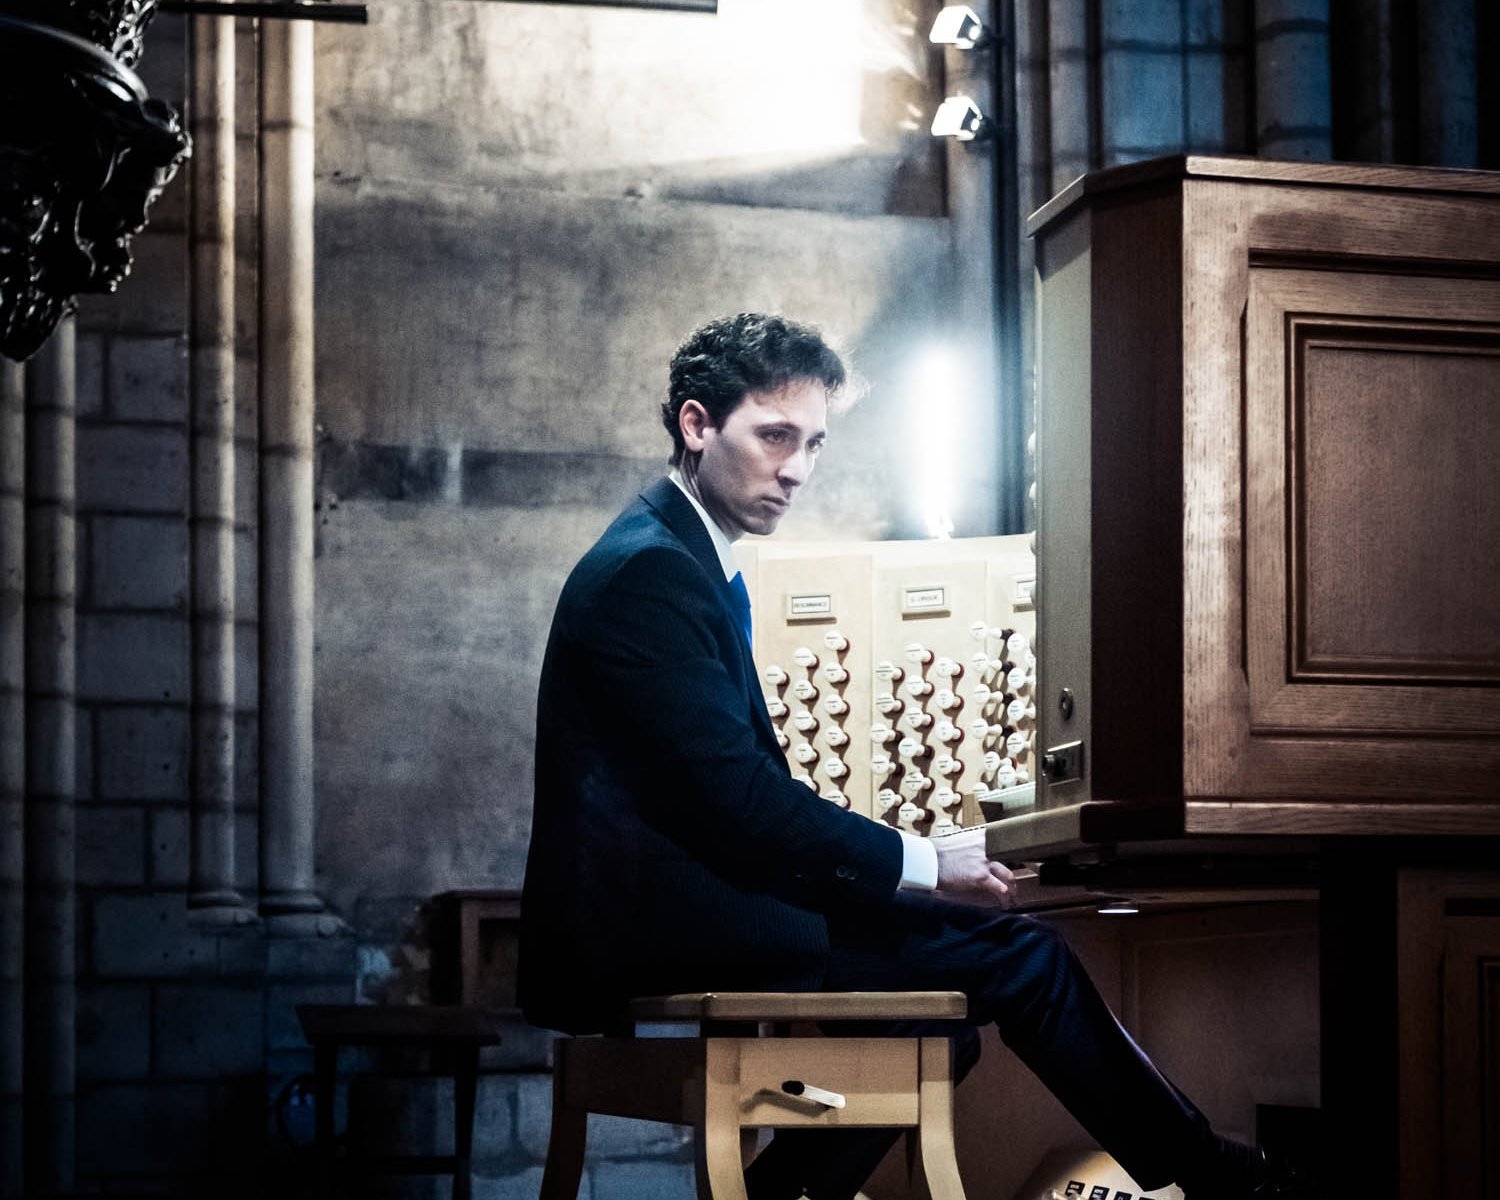 Vincent Dubois sits at an organ